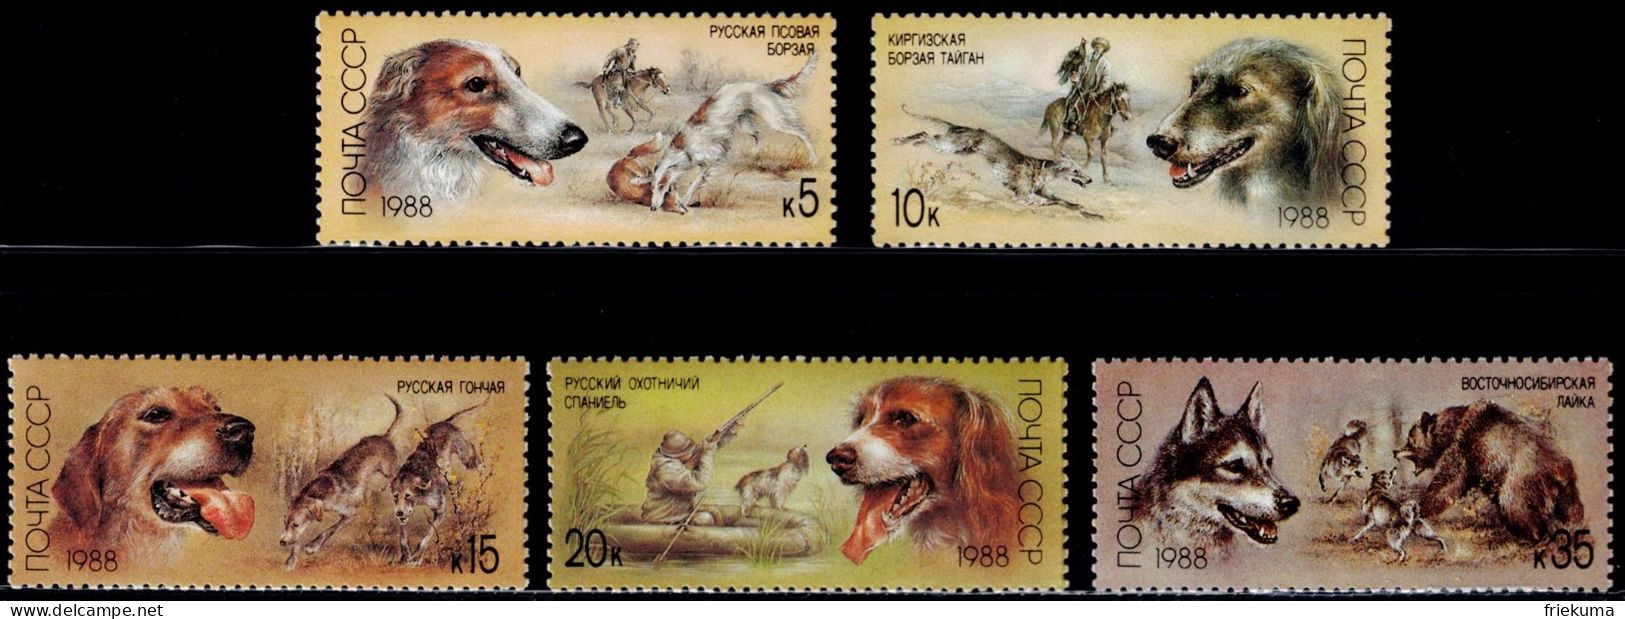 CCCP 1988, Dogs: Barsoi, Taigan, Russian Hunting Dog, Russian Spaniel, East Siberian Polar Dog (Laika), MiNr. 5827-5831 - Dogs